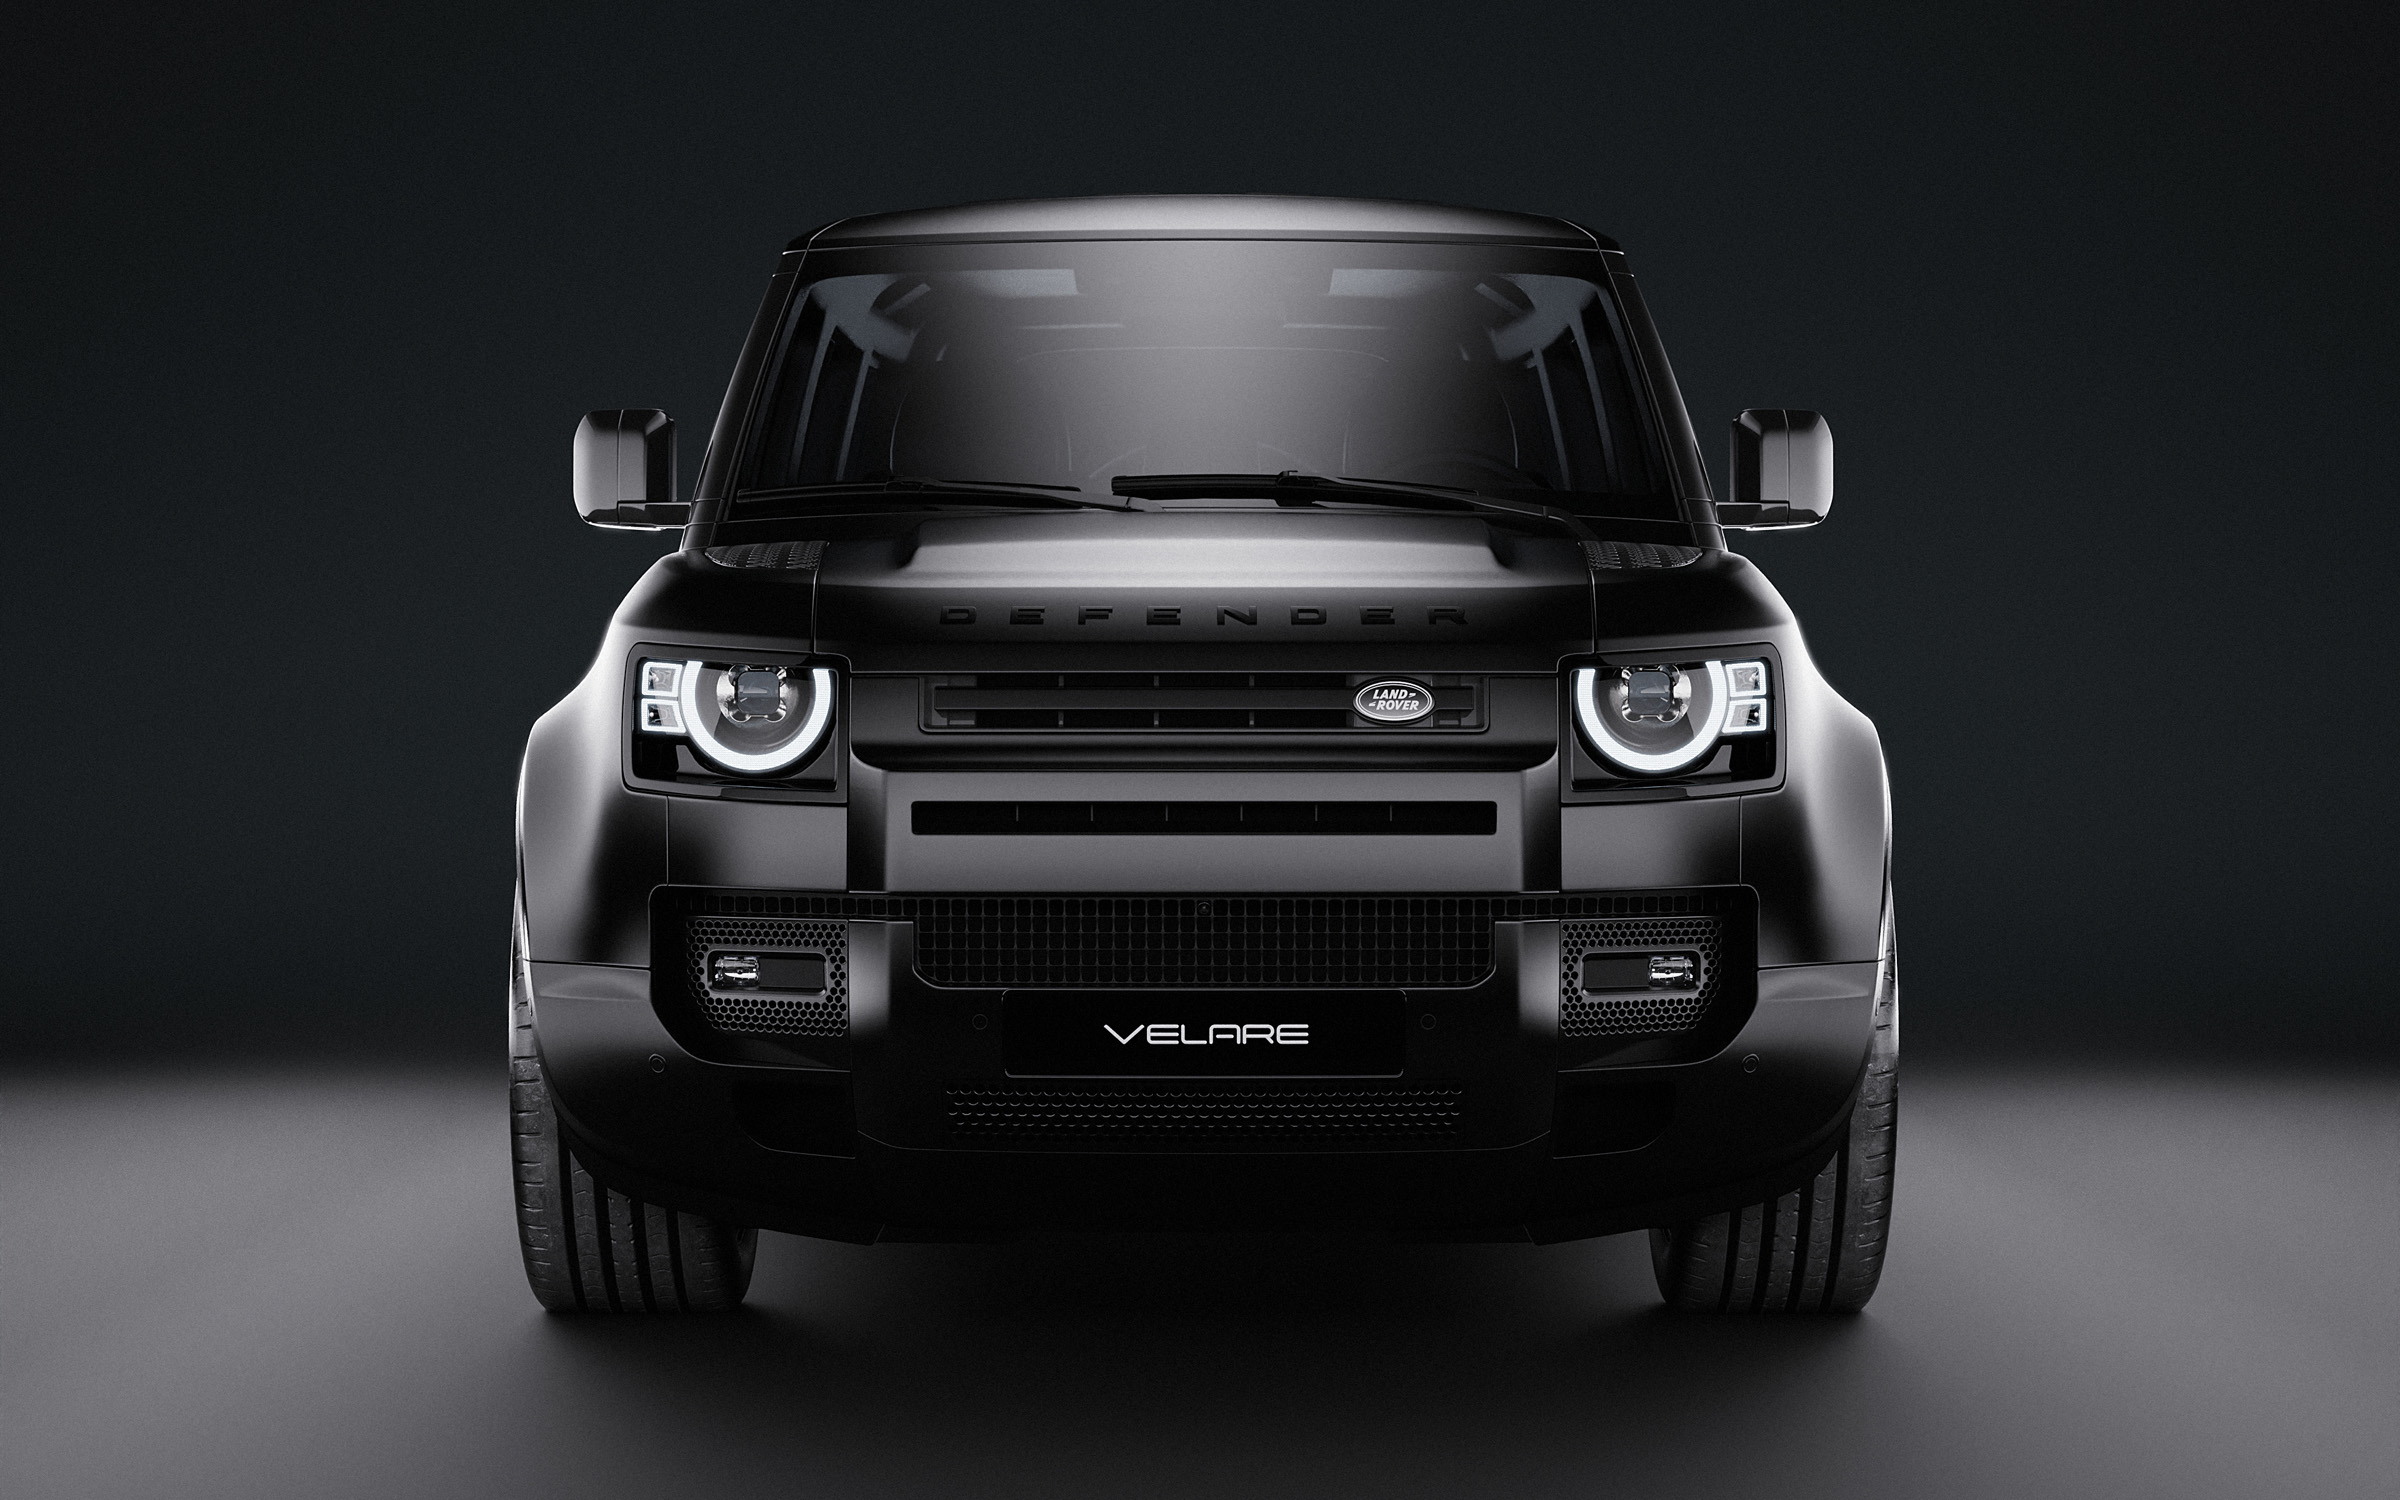 Land Rover Defender 110 2020 5dr VLR02 Matt Black Wipdesigns CGI (8)